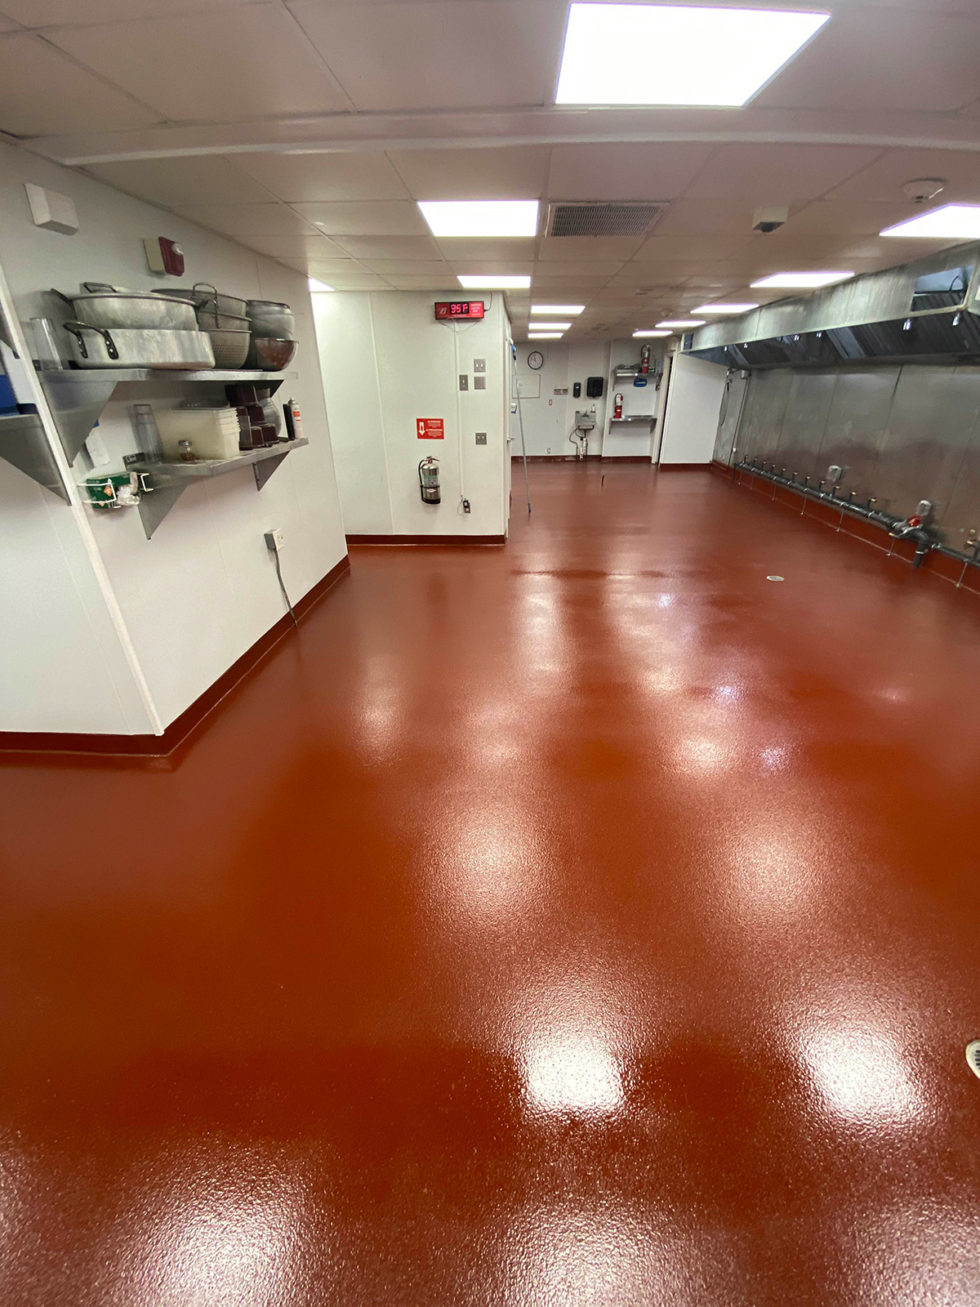 Restaurant & Food Service Flooring - Everlast Industrial Flooring in CT